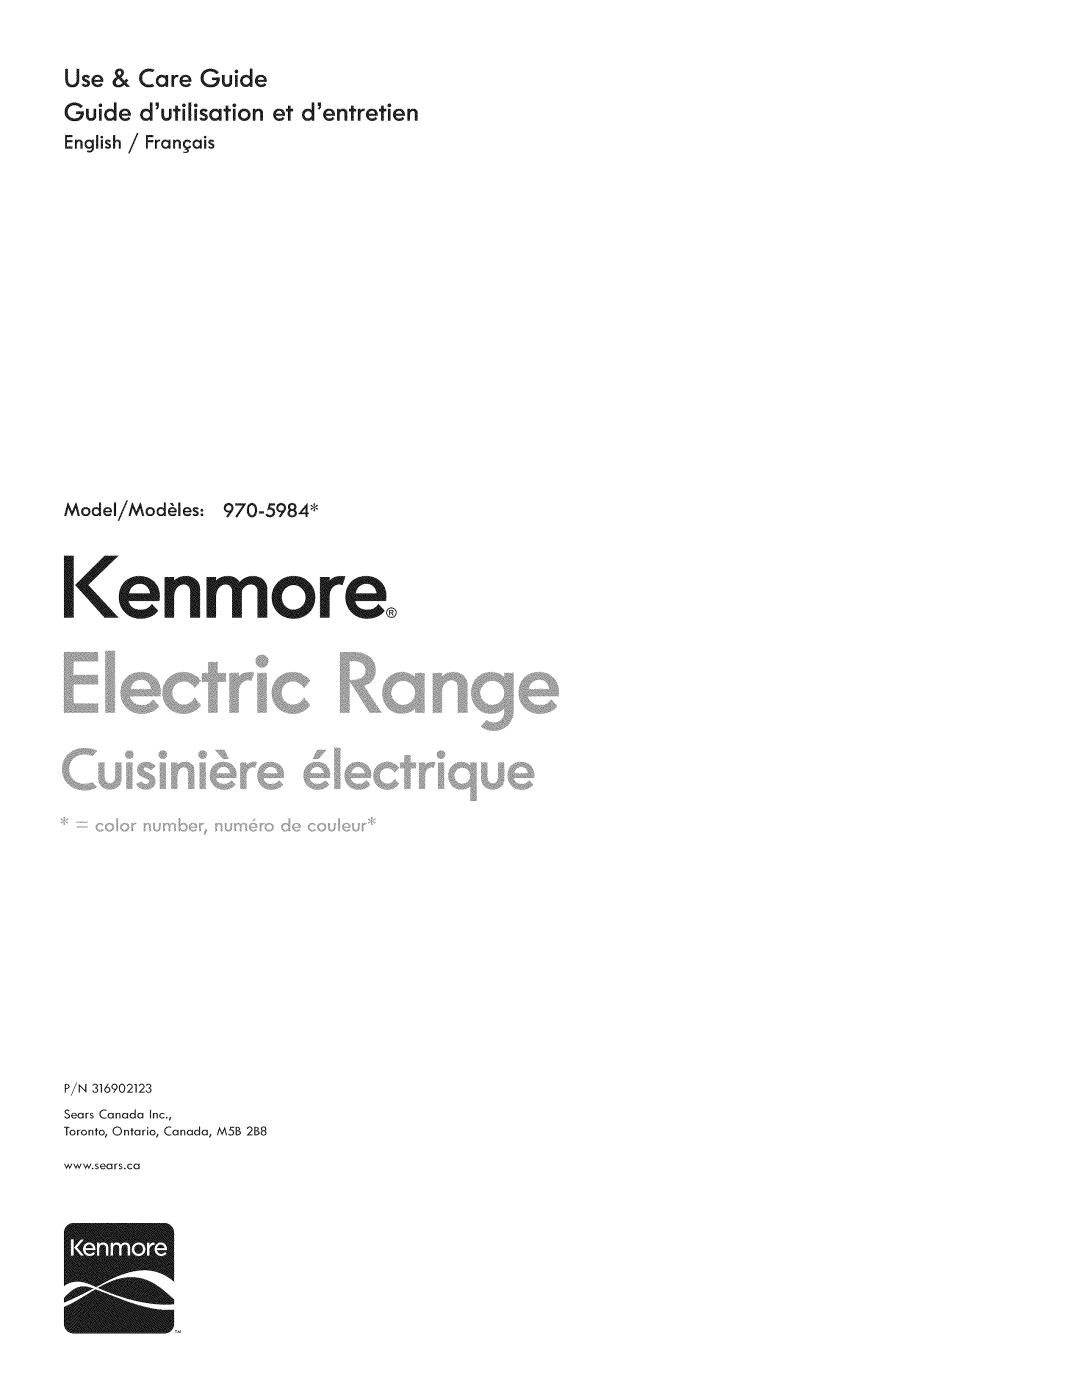 Kenmore 970-5984 manual Use & Care Guide Guide dutiJisation et dentretien, Engish / Frangais ModeJ/Mod les, I enmore 